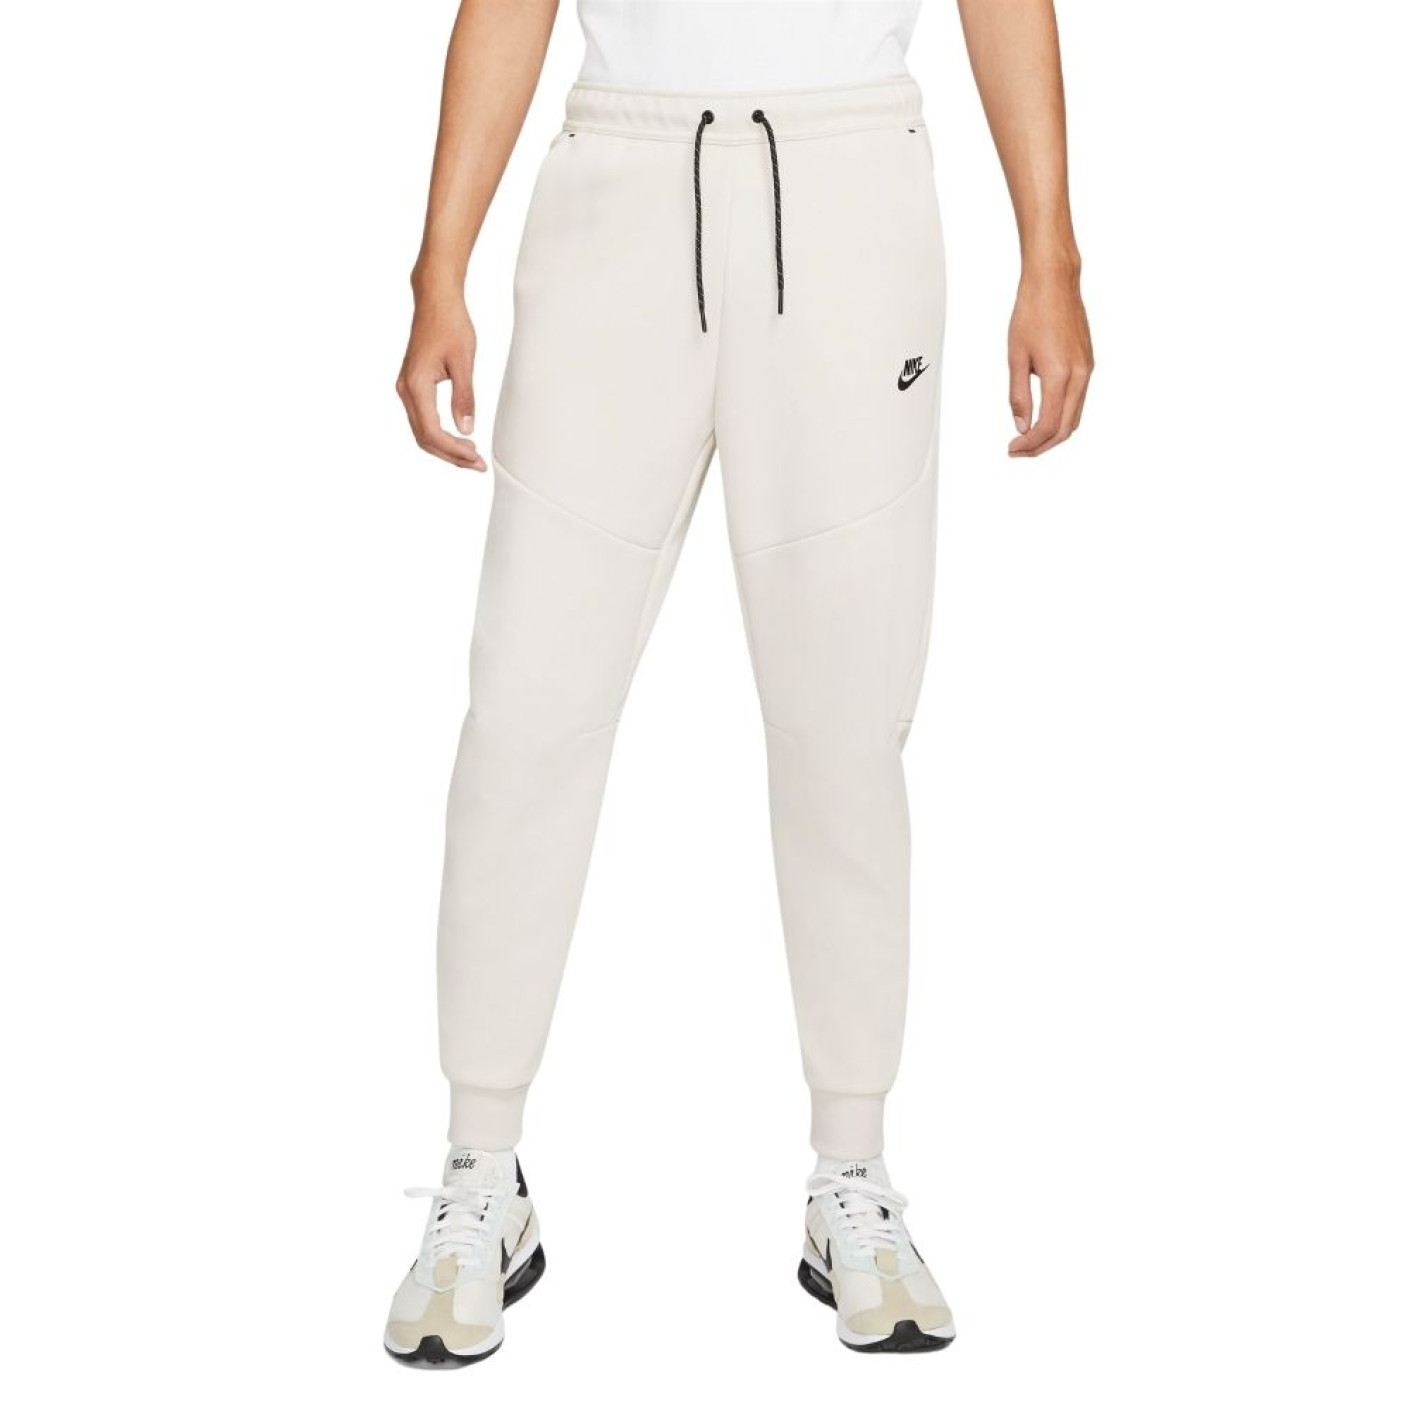 Pantalon de jogging Nike Tech Fleece blanc noir